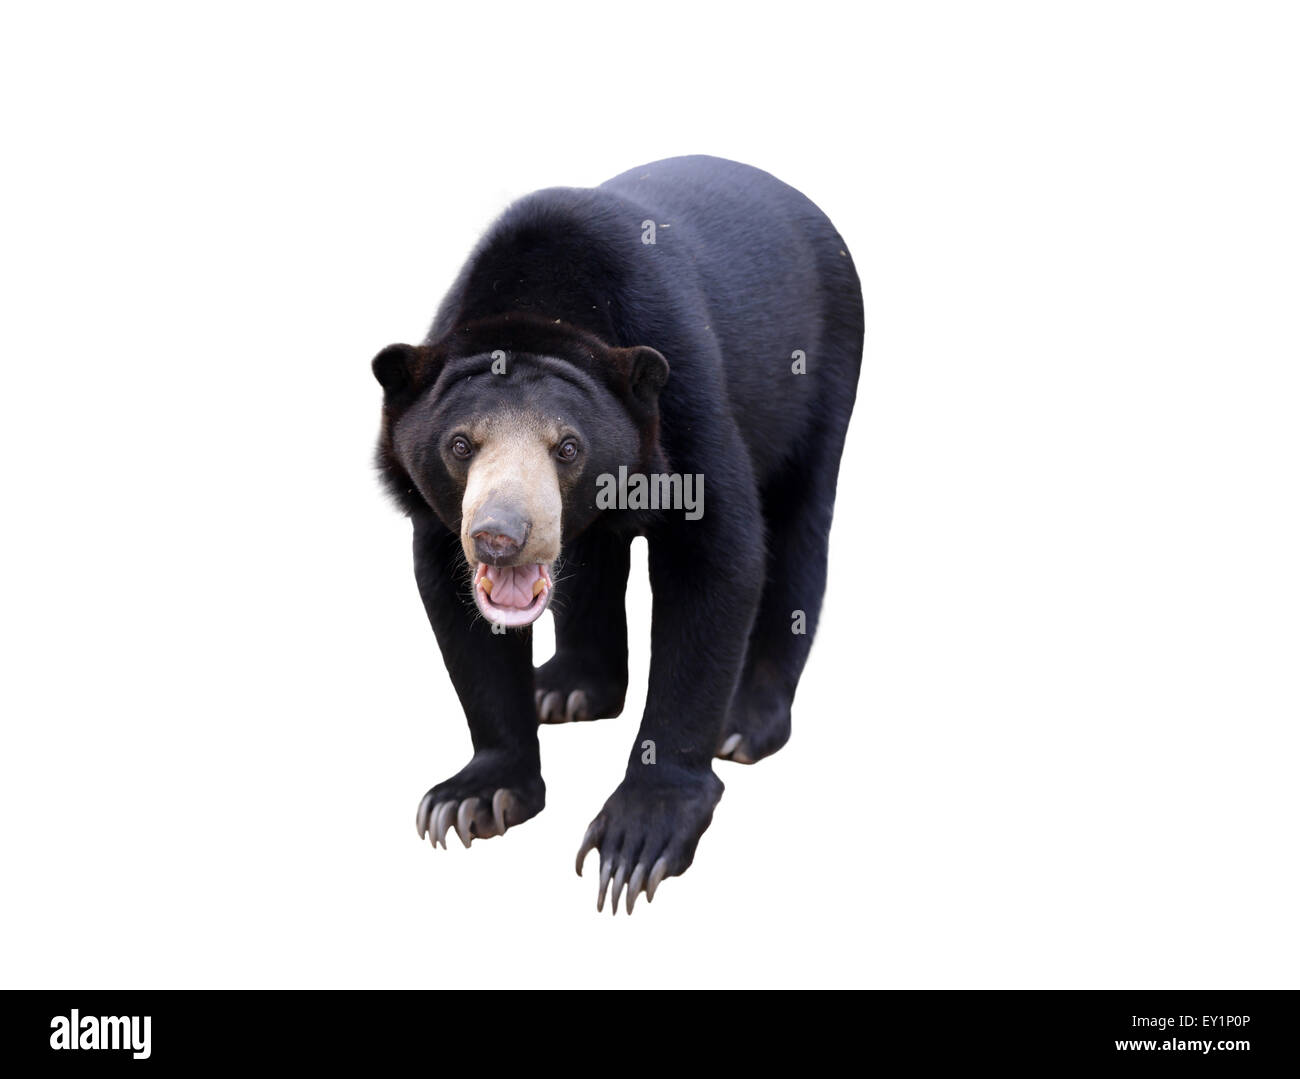 malayan sun bear isolated on white background Stock Photo